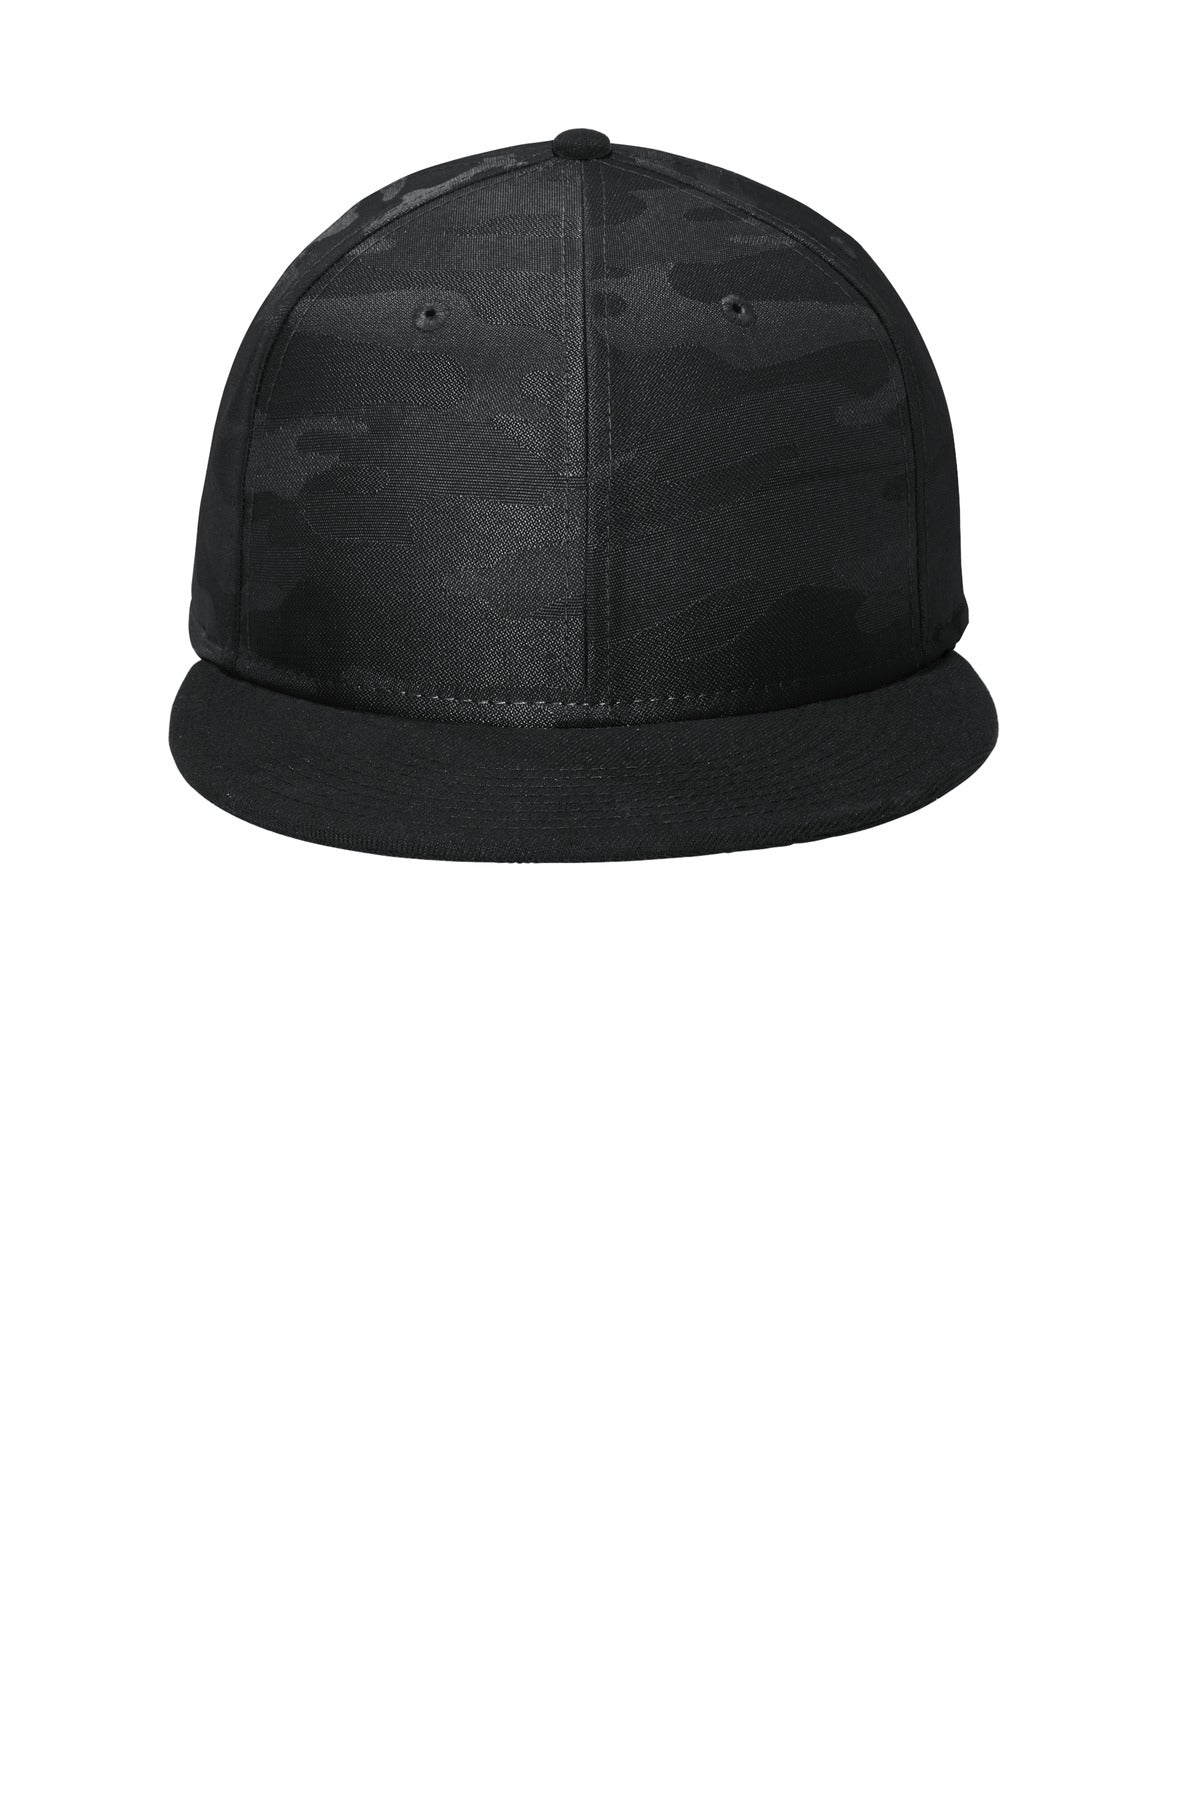 Caps Black/ Black Camo OSFA New Era